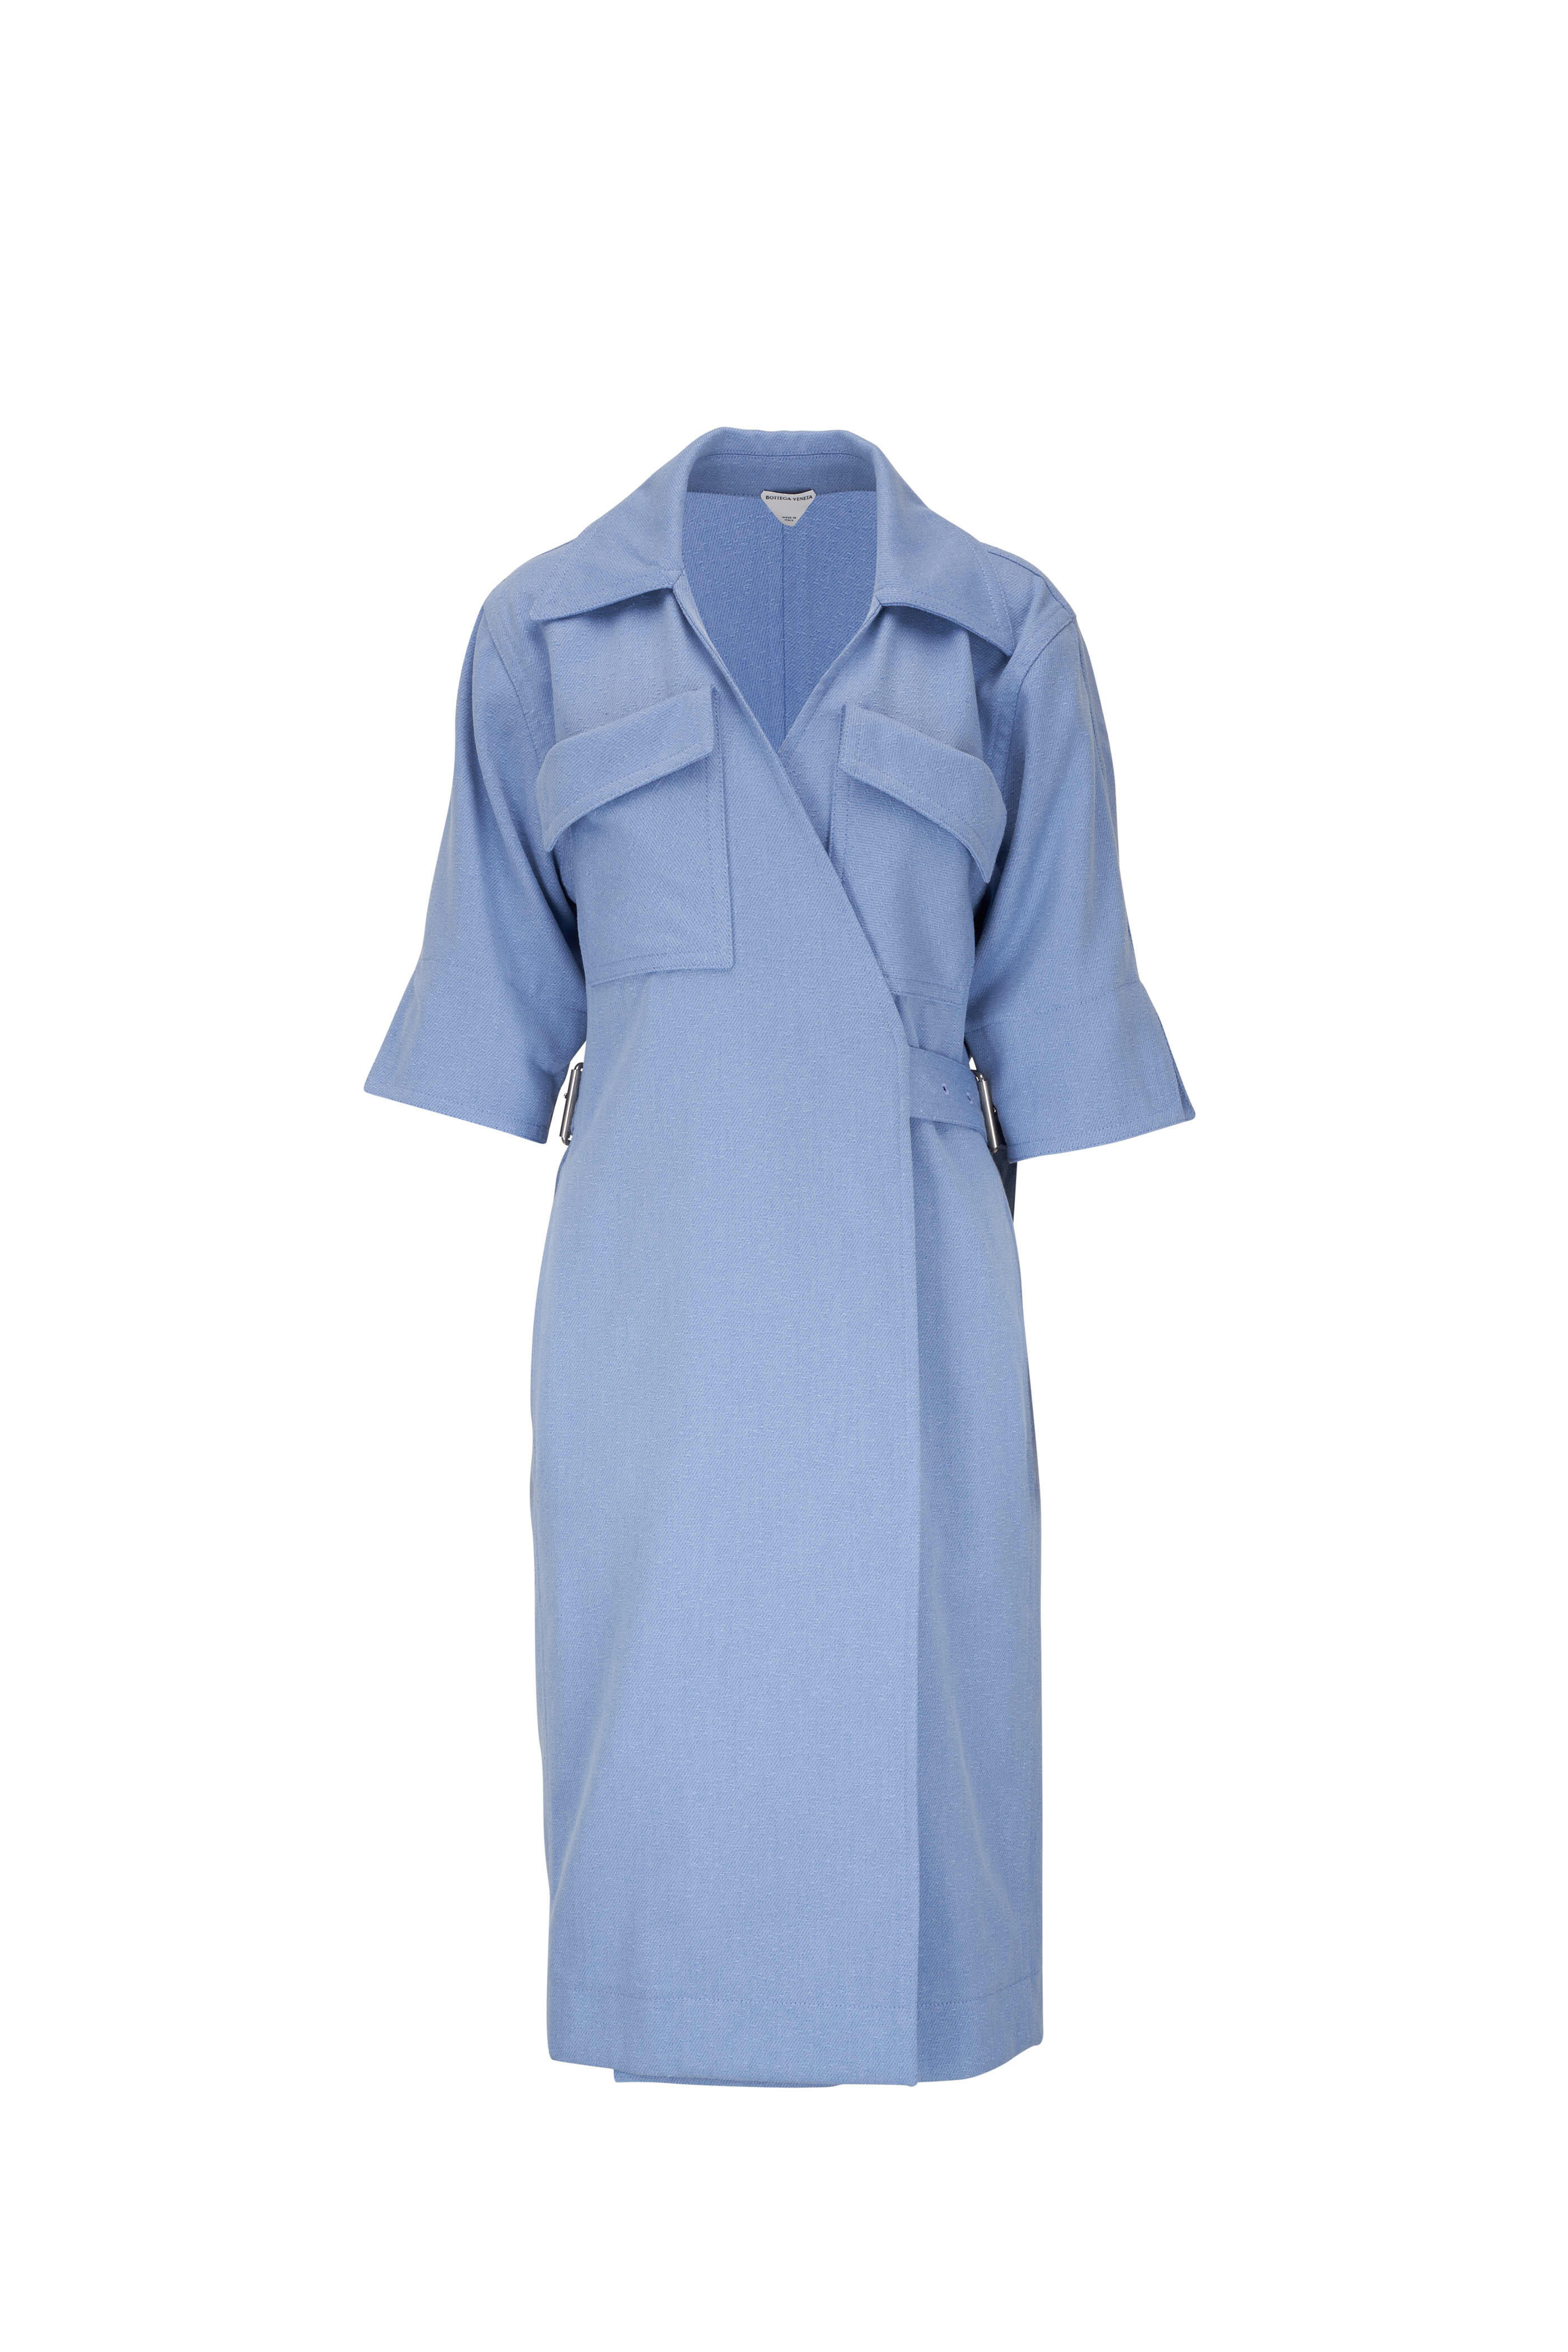 Bottega Veneta - Blue Knotted Melange Twill Belted Wrap Dress